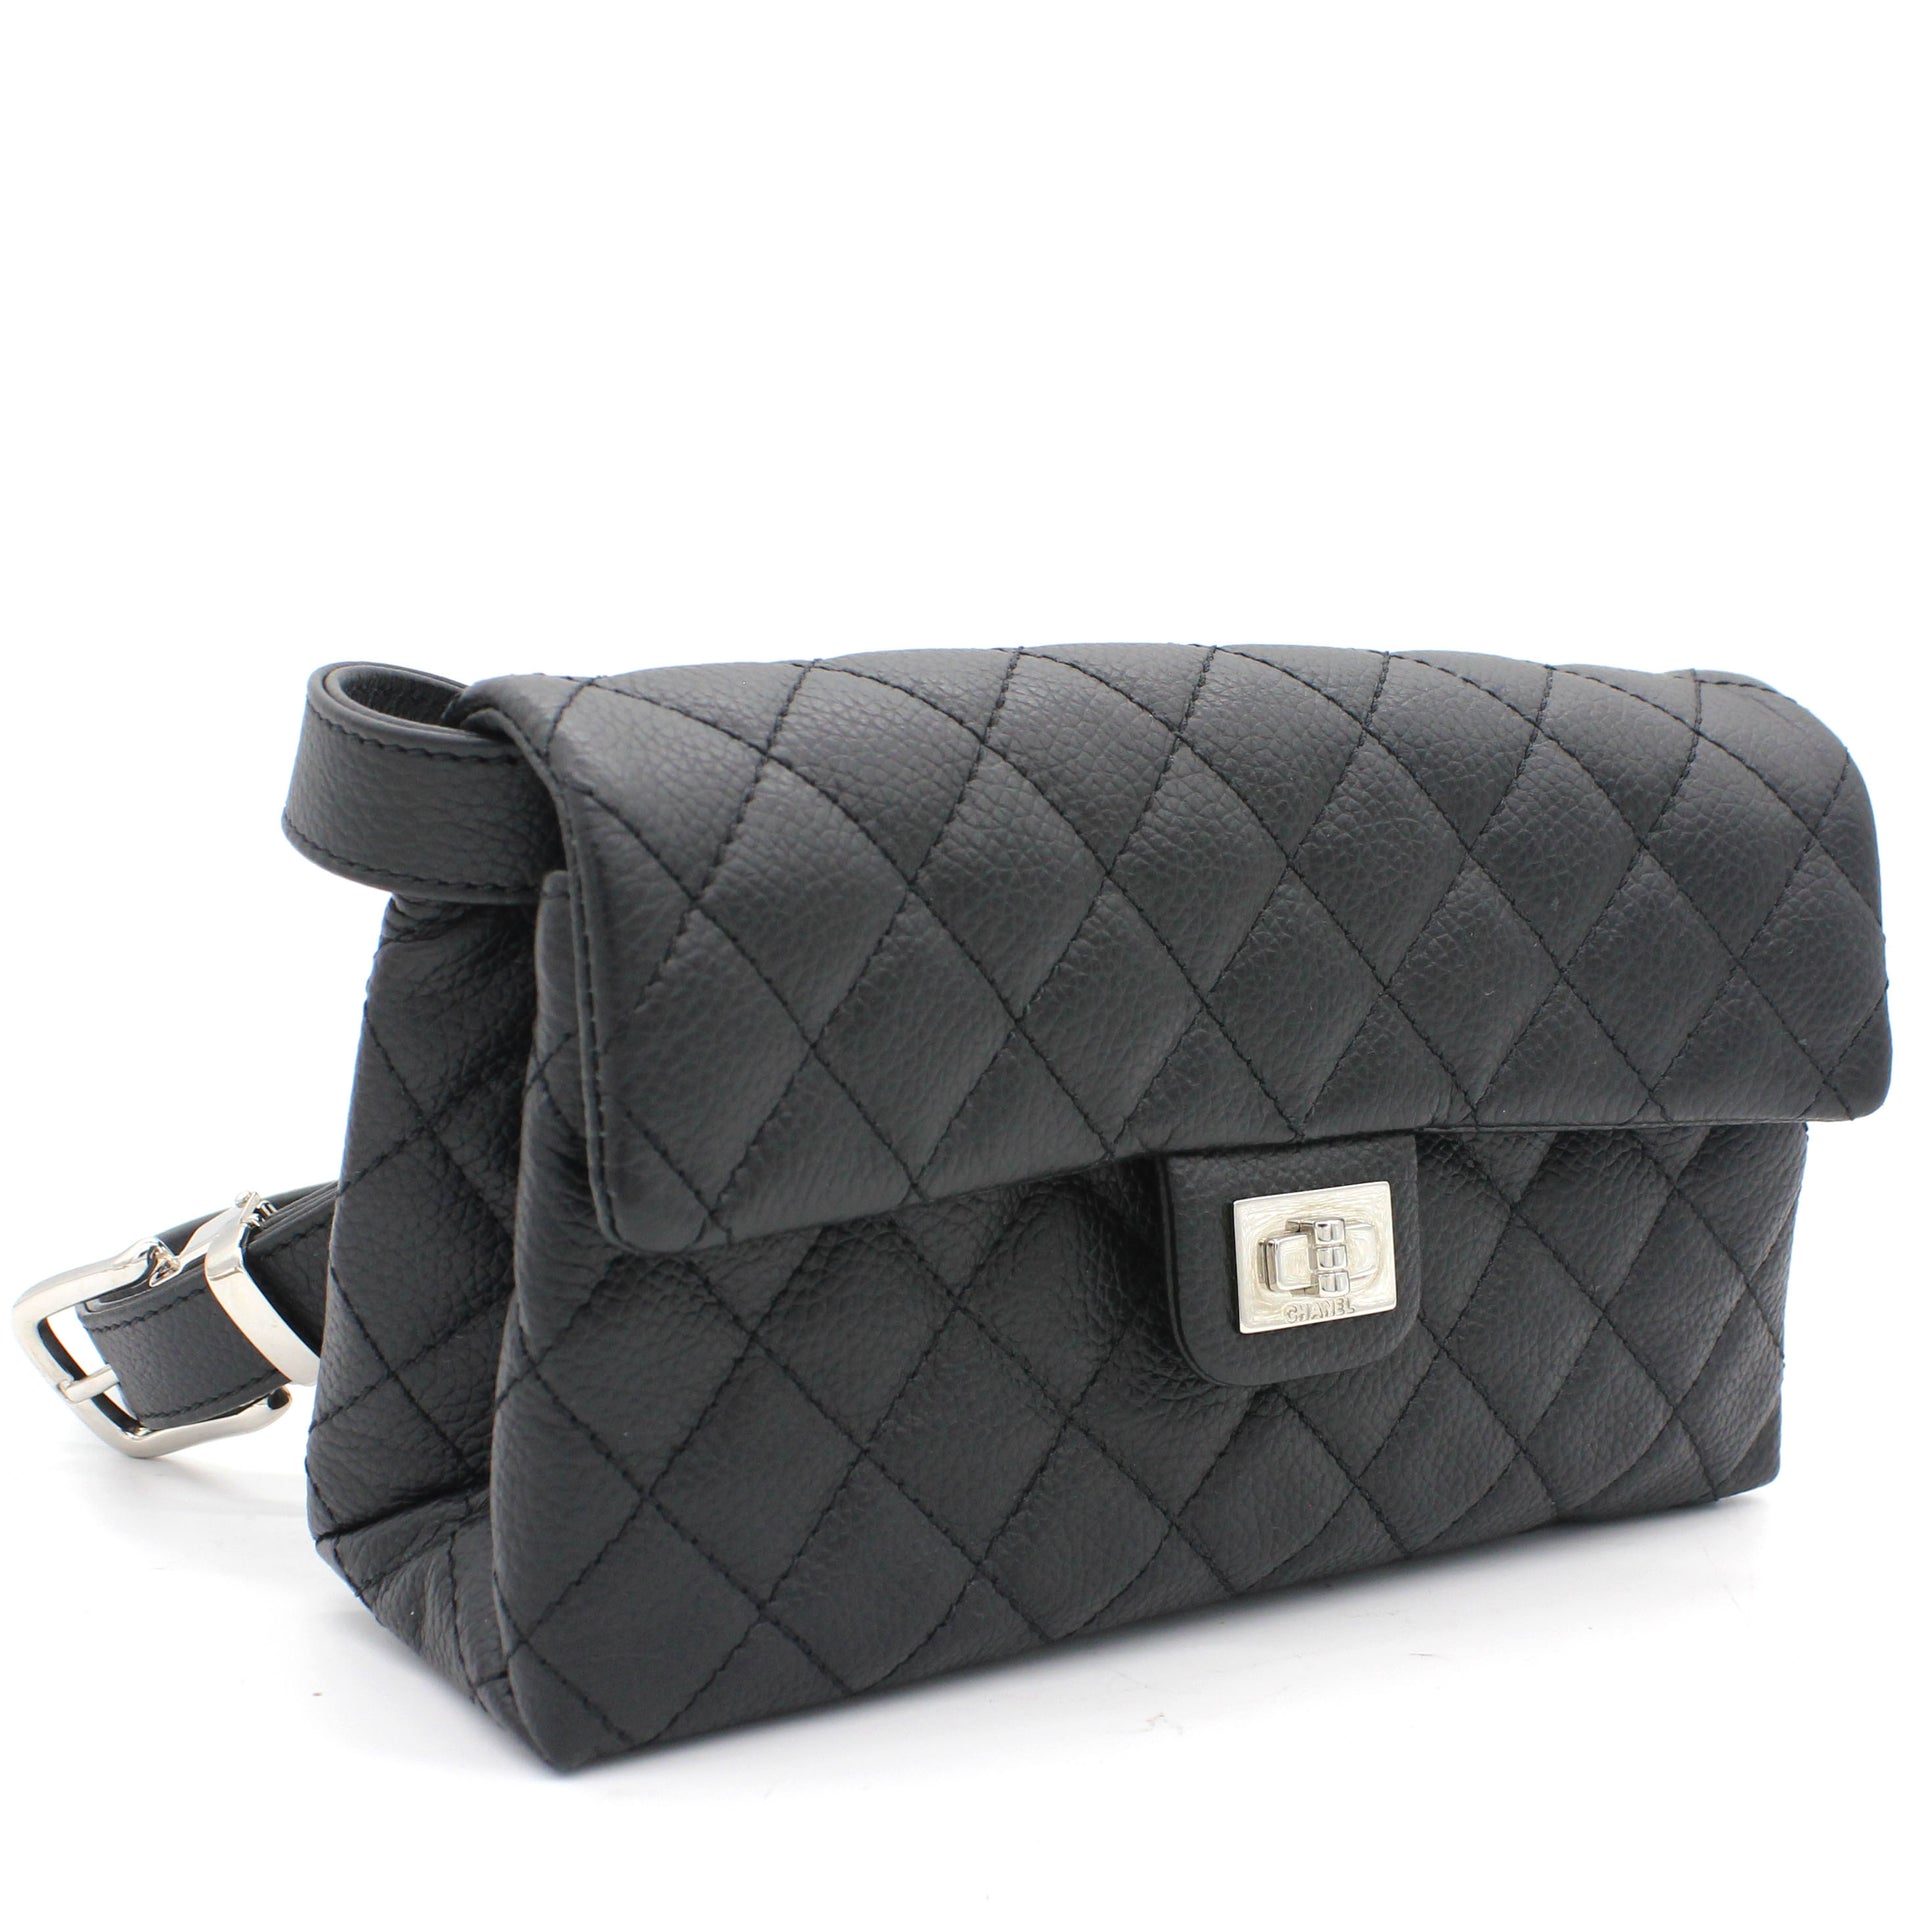 Black Chanel CC Belt Bag